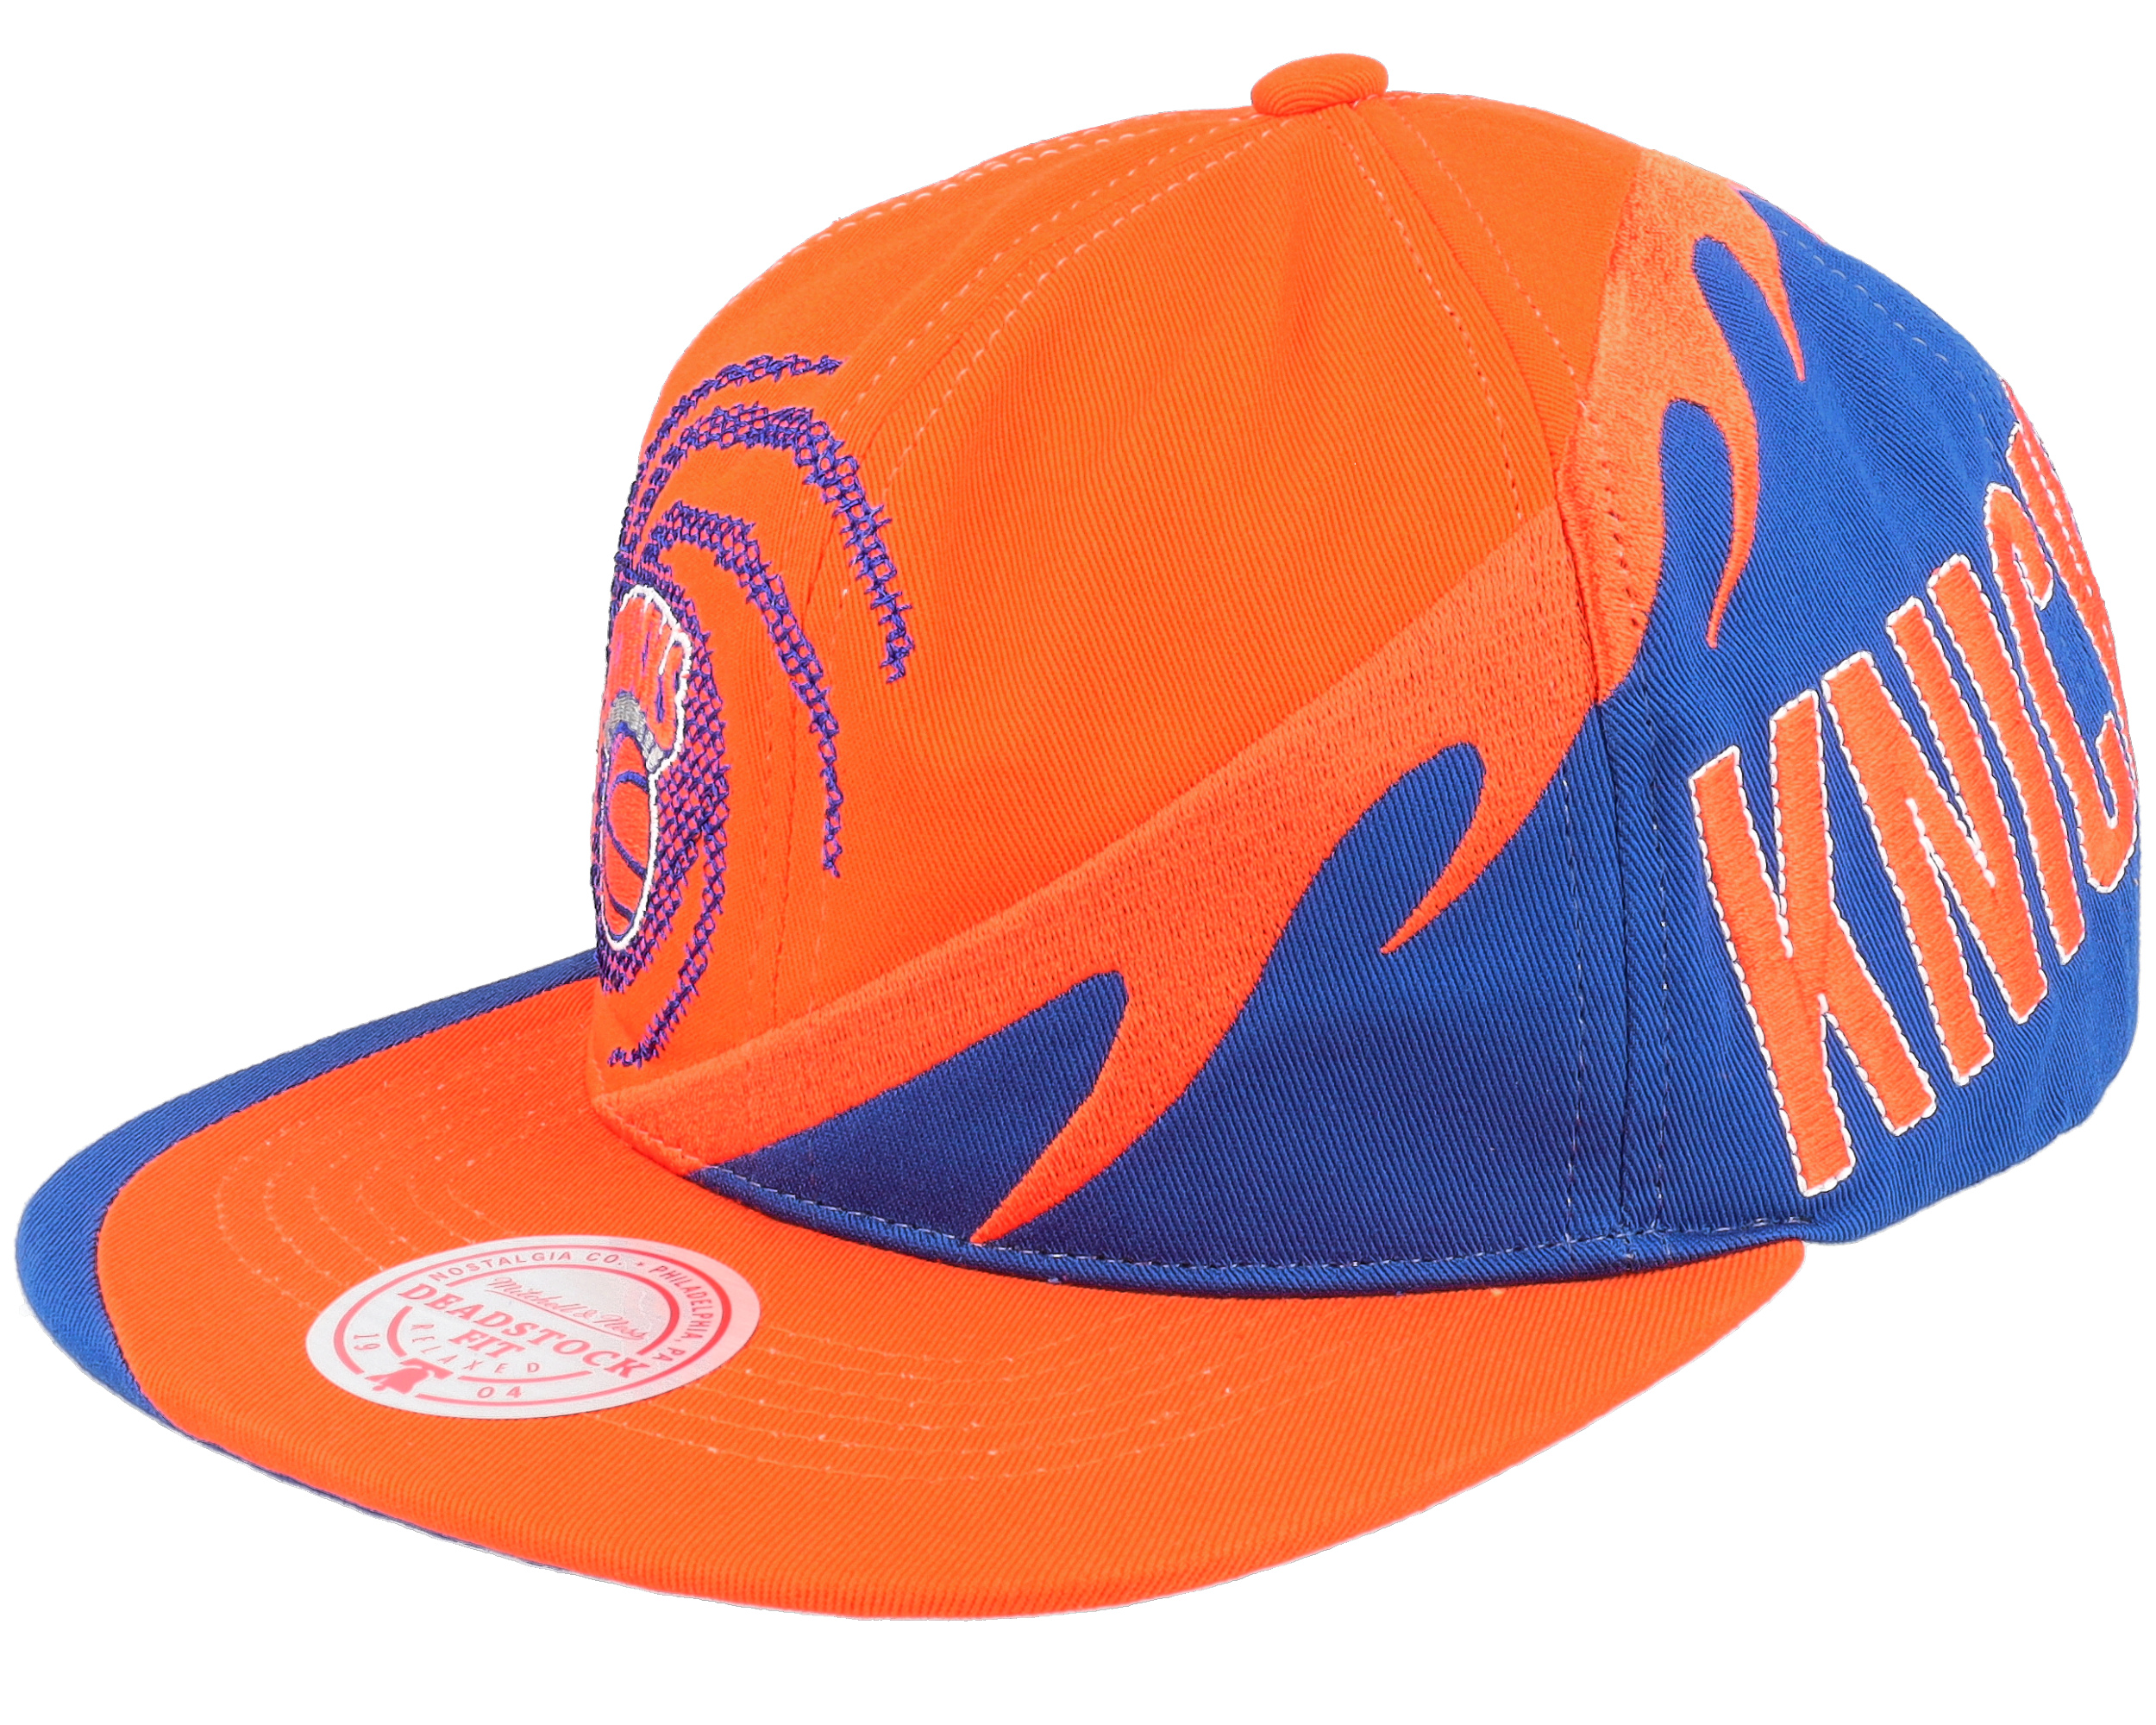 New York Knicks Spiral Deadstock Orange Snapback - Mitchell & Ness